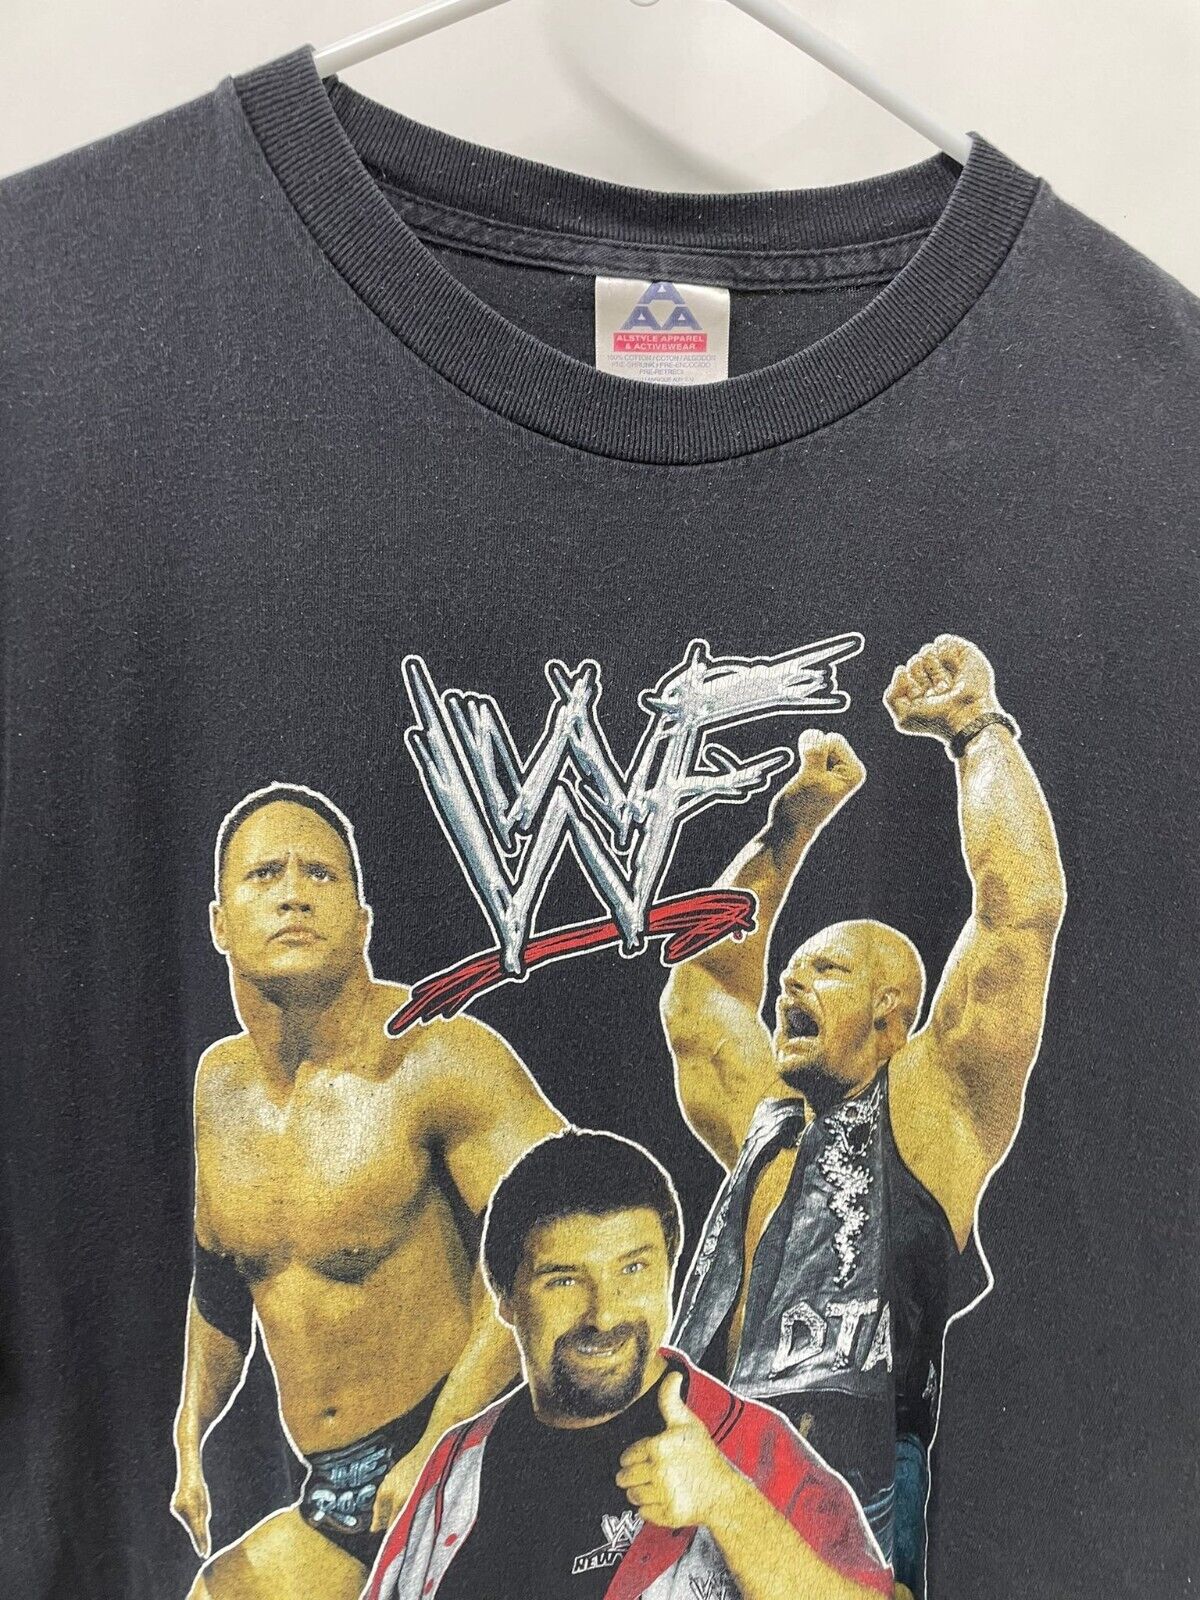 WWF Attitude Mens XL Mick Foley Stone Cold The Rock T Shirt VTG